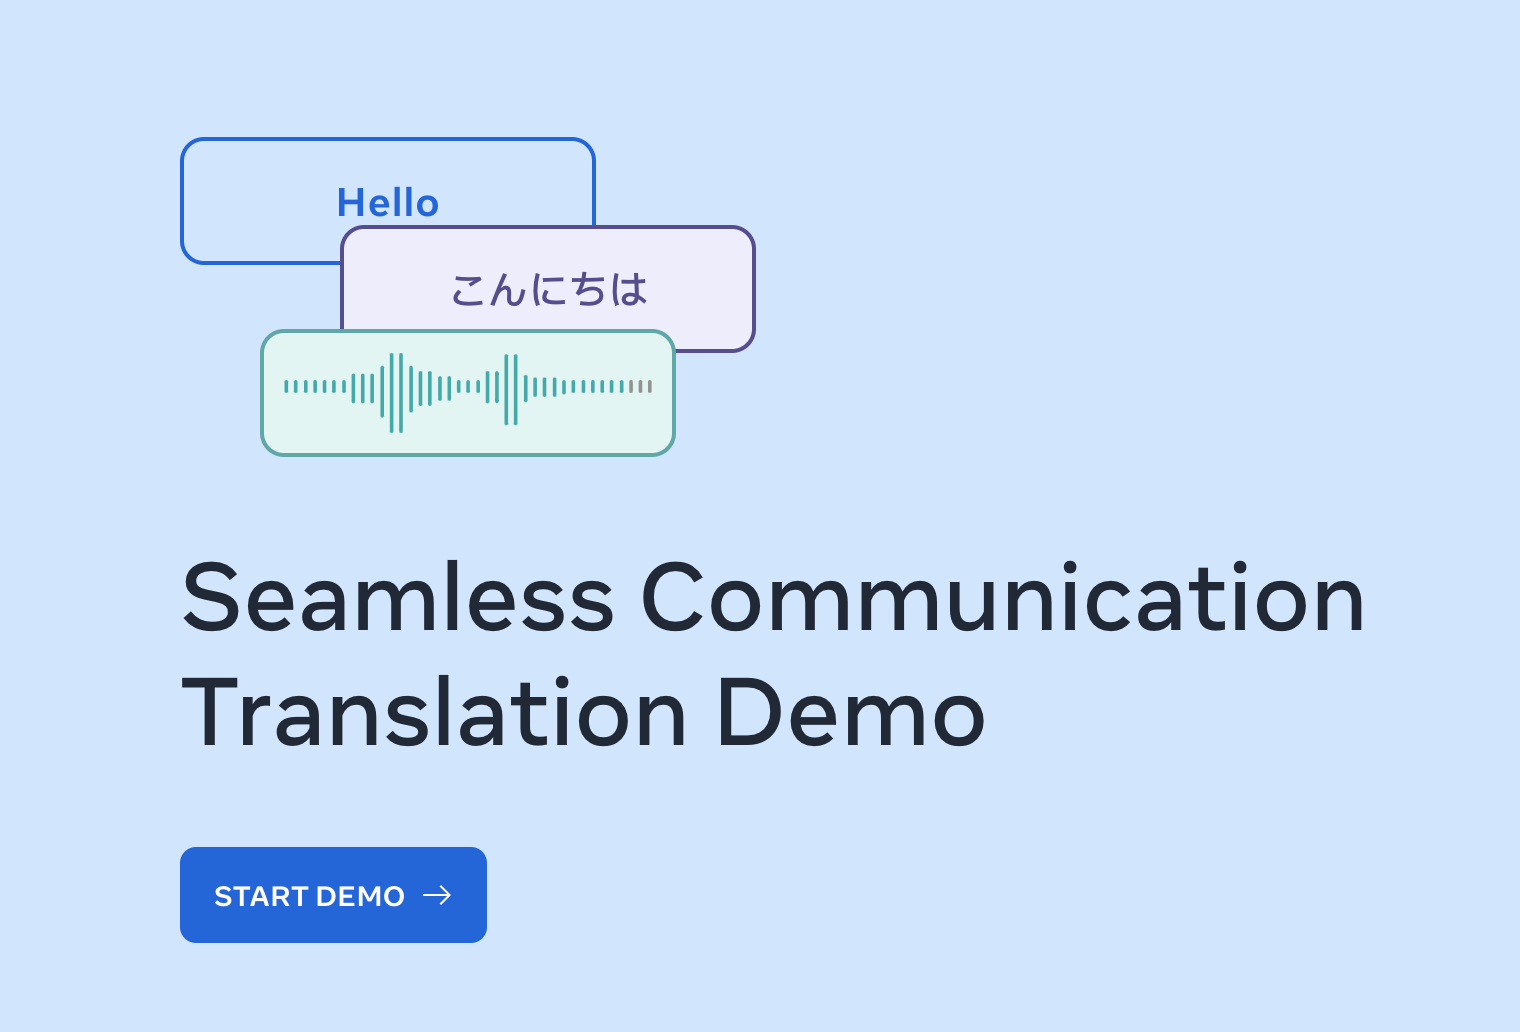 Meta于开源发布了AI翻译模型SeamlessM4T，能转录和翻译数百种语言的语音和文本